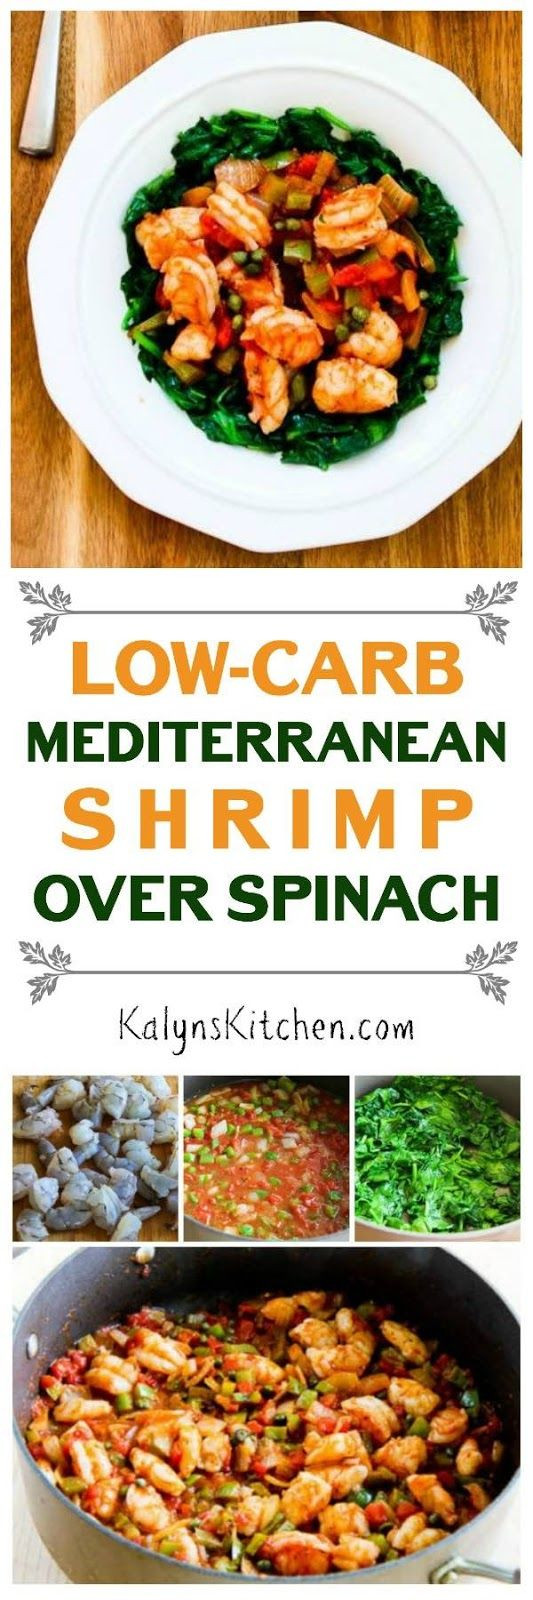 Low Carb Mediterranean Diet
 Low Carb Mediterranean Shrimp over Spinach